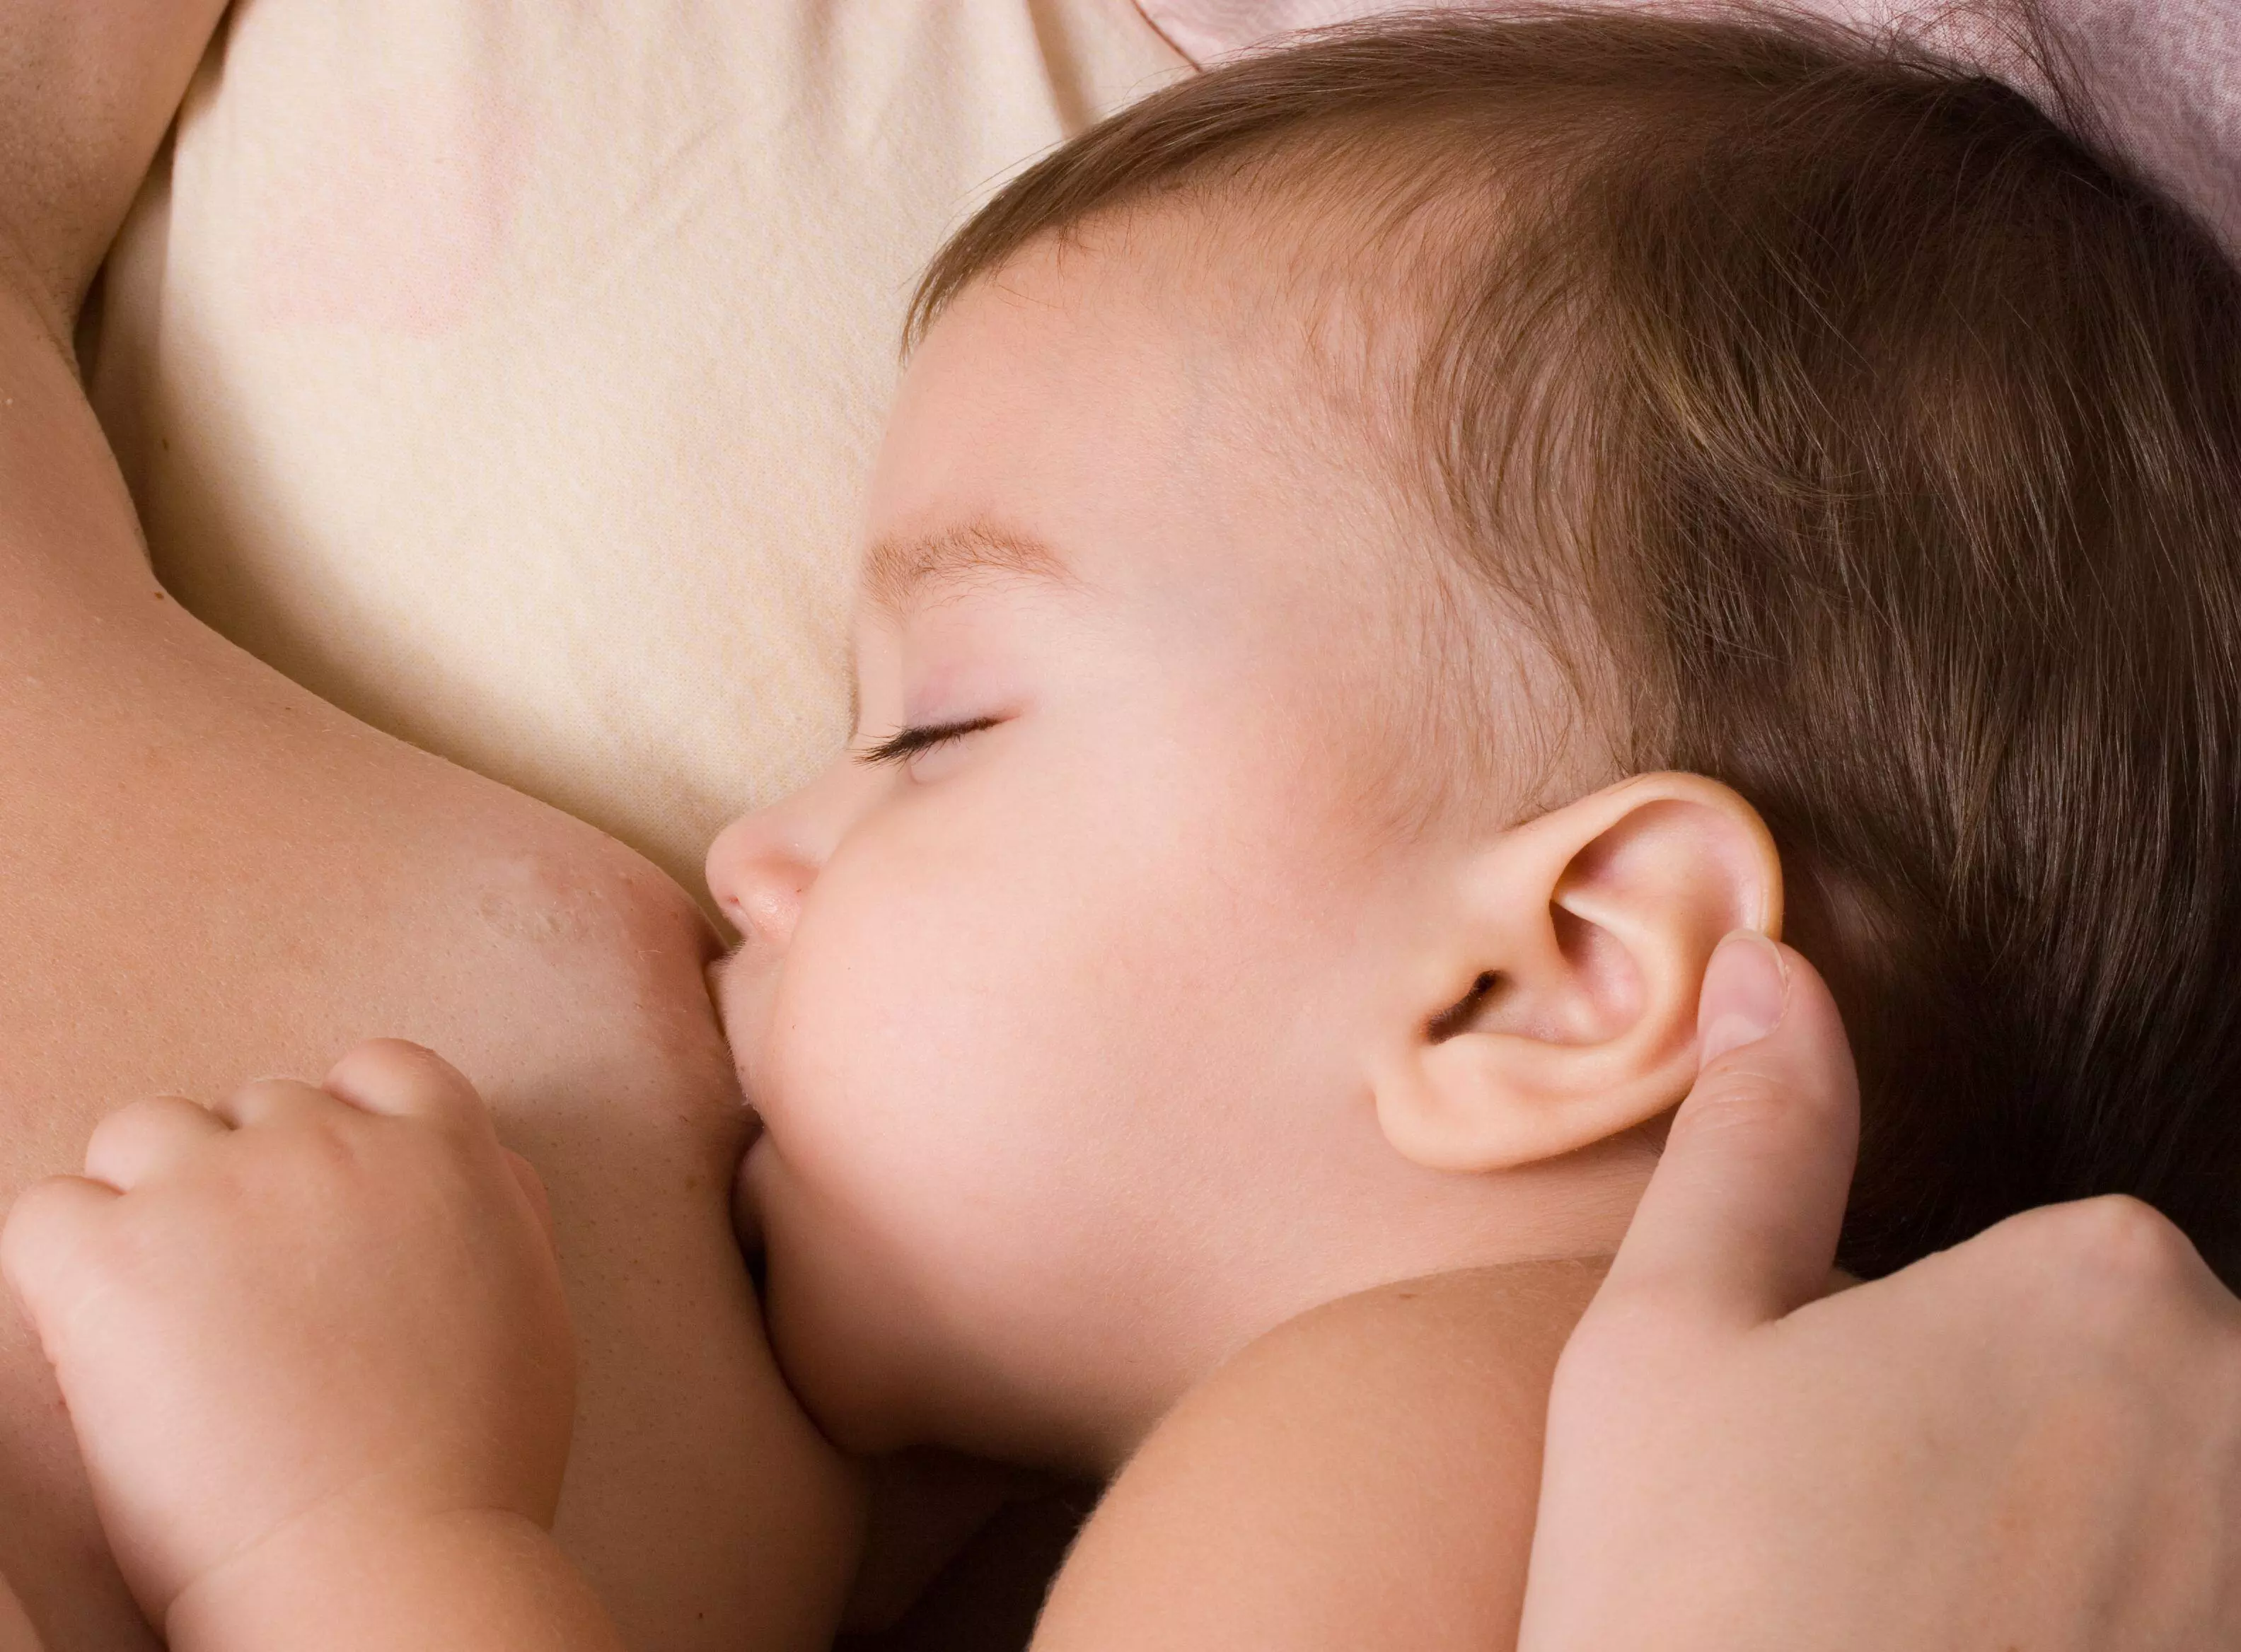 Ergonomic infant carrier increase breastfeeding rates: Study